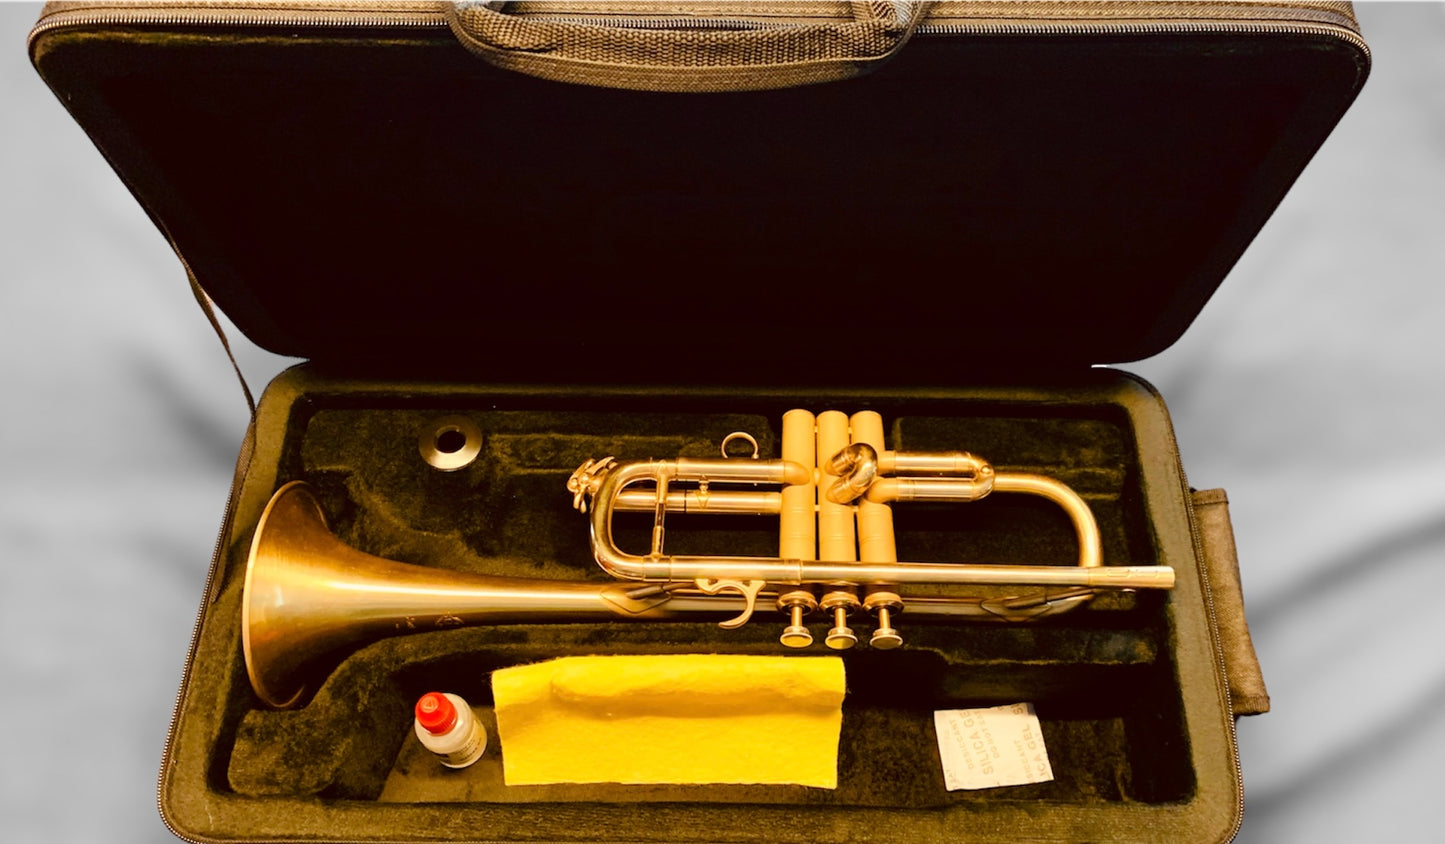 Trumpet C Henri Selmer